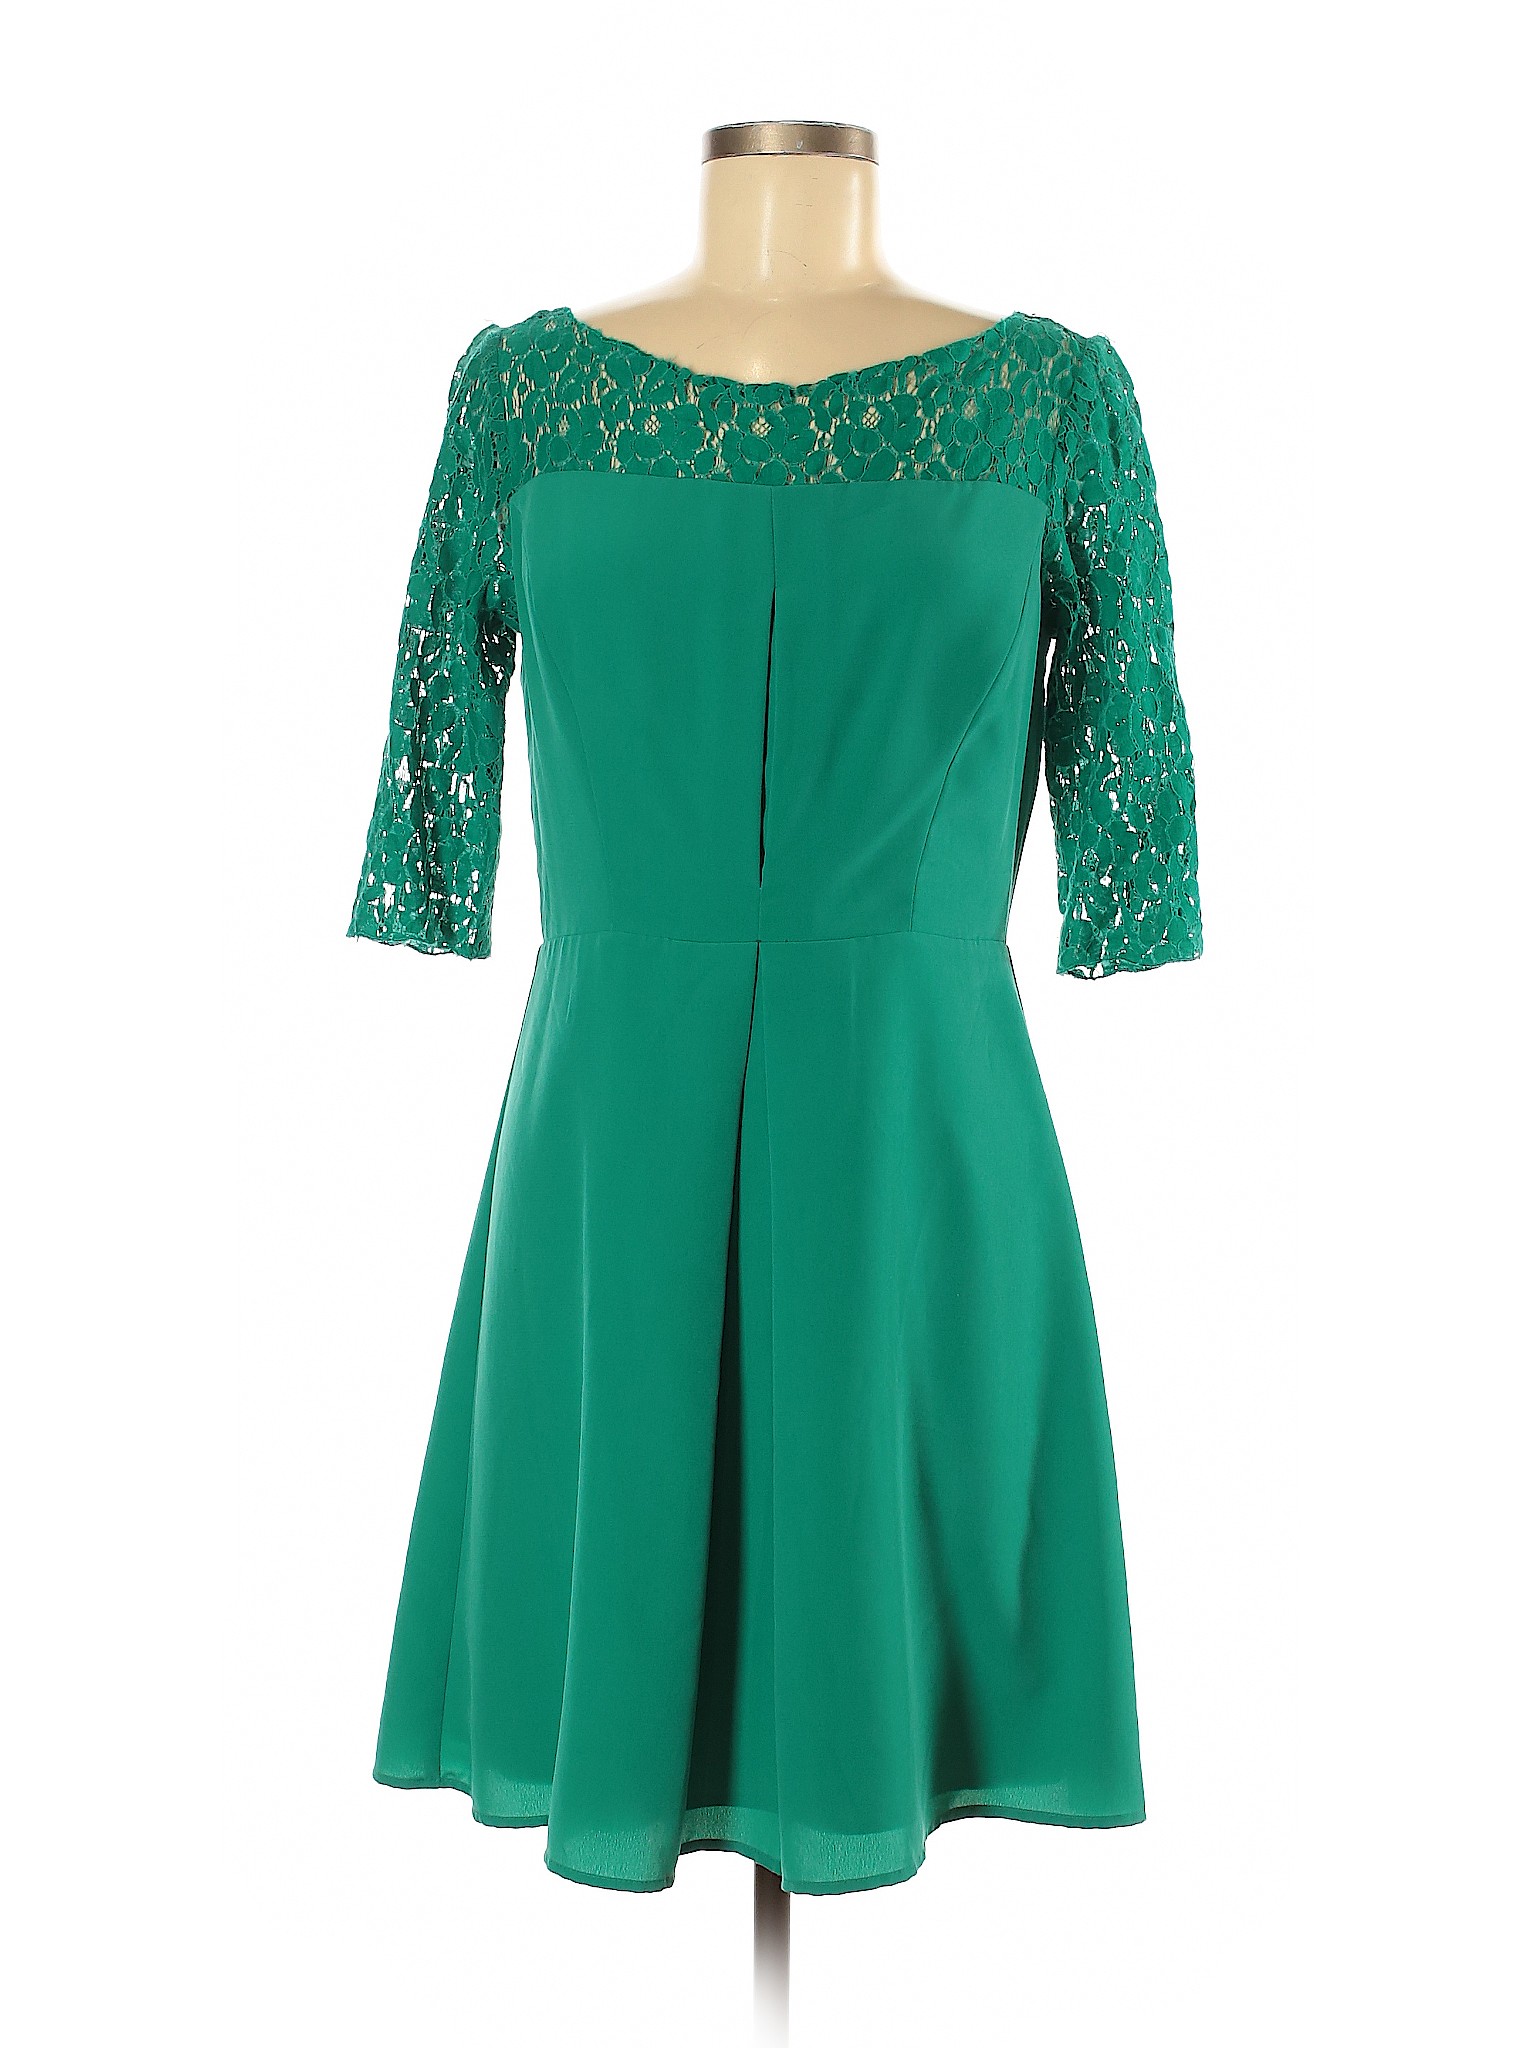 Jessica Simpson Women Green Cocktail Dress 6 | eBay